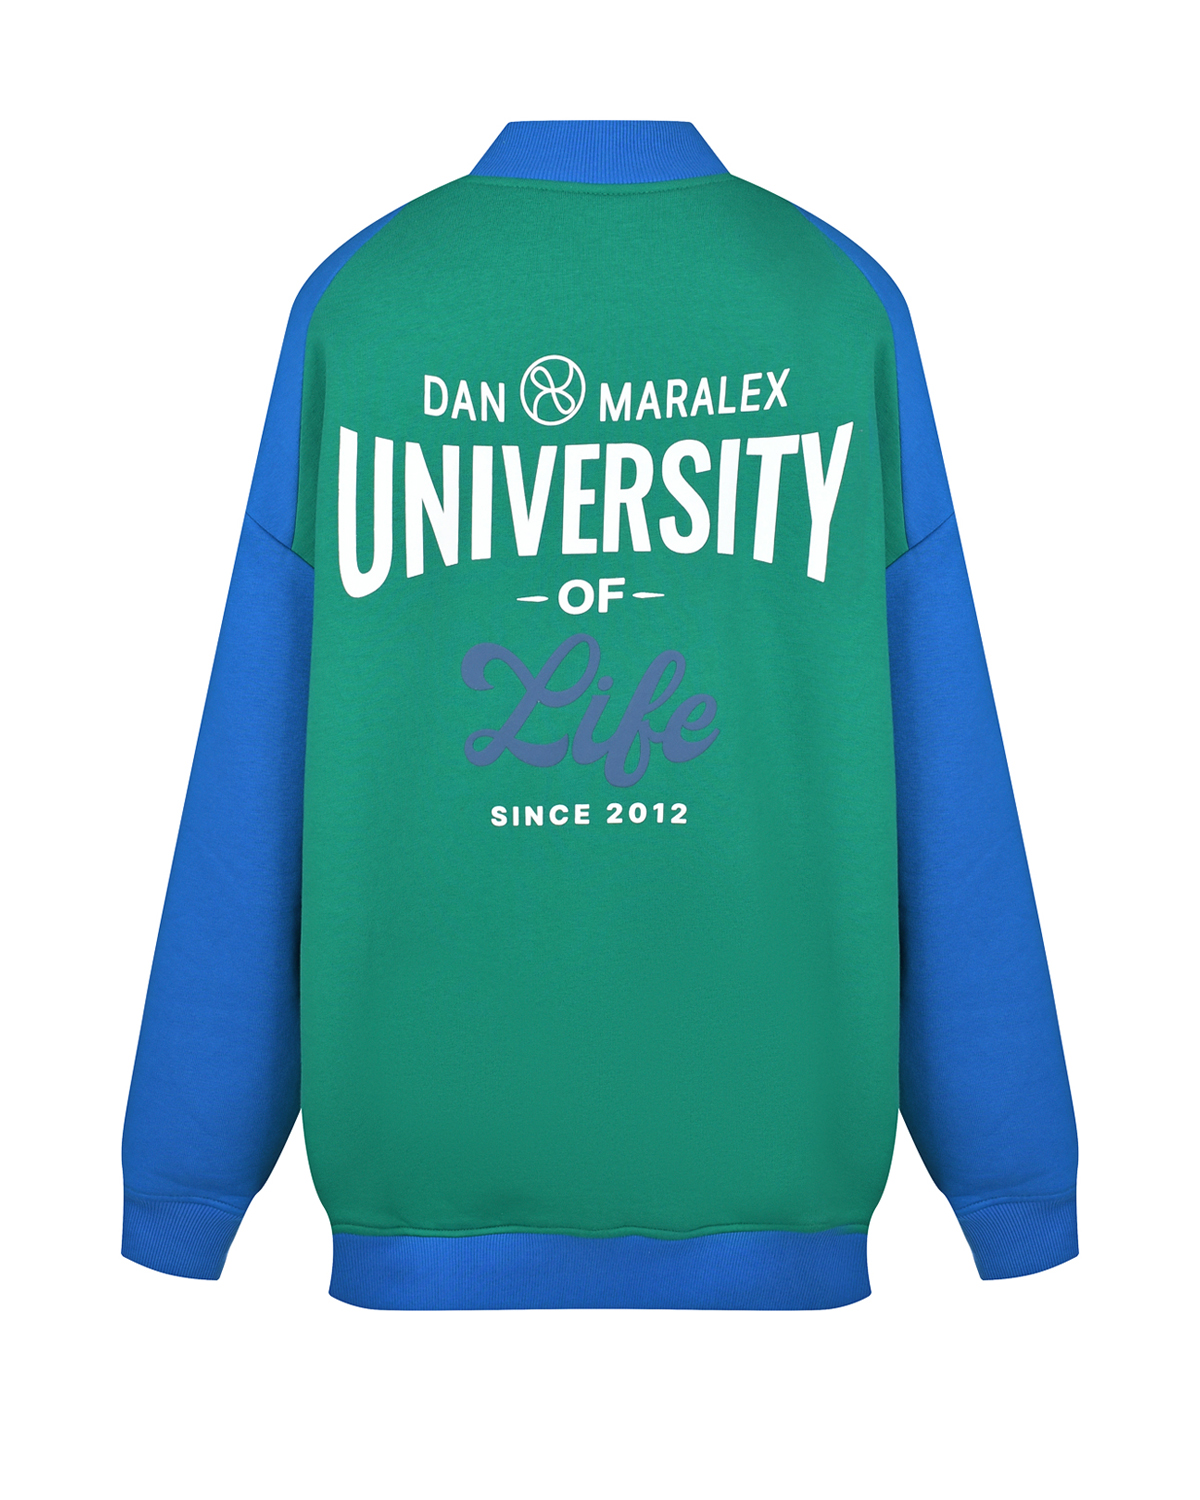 Сине-зеленая куртка-бомбер Dan Maralex, размер 42, цвет мультиколор - фото 5